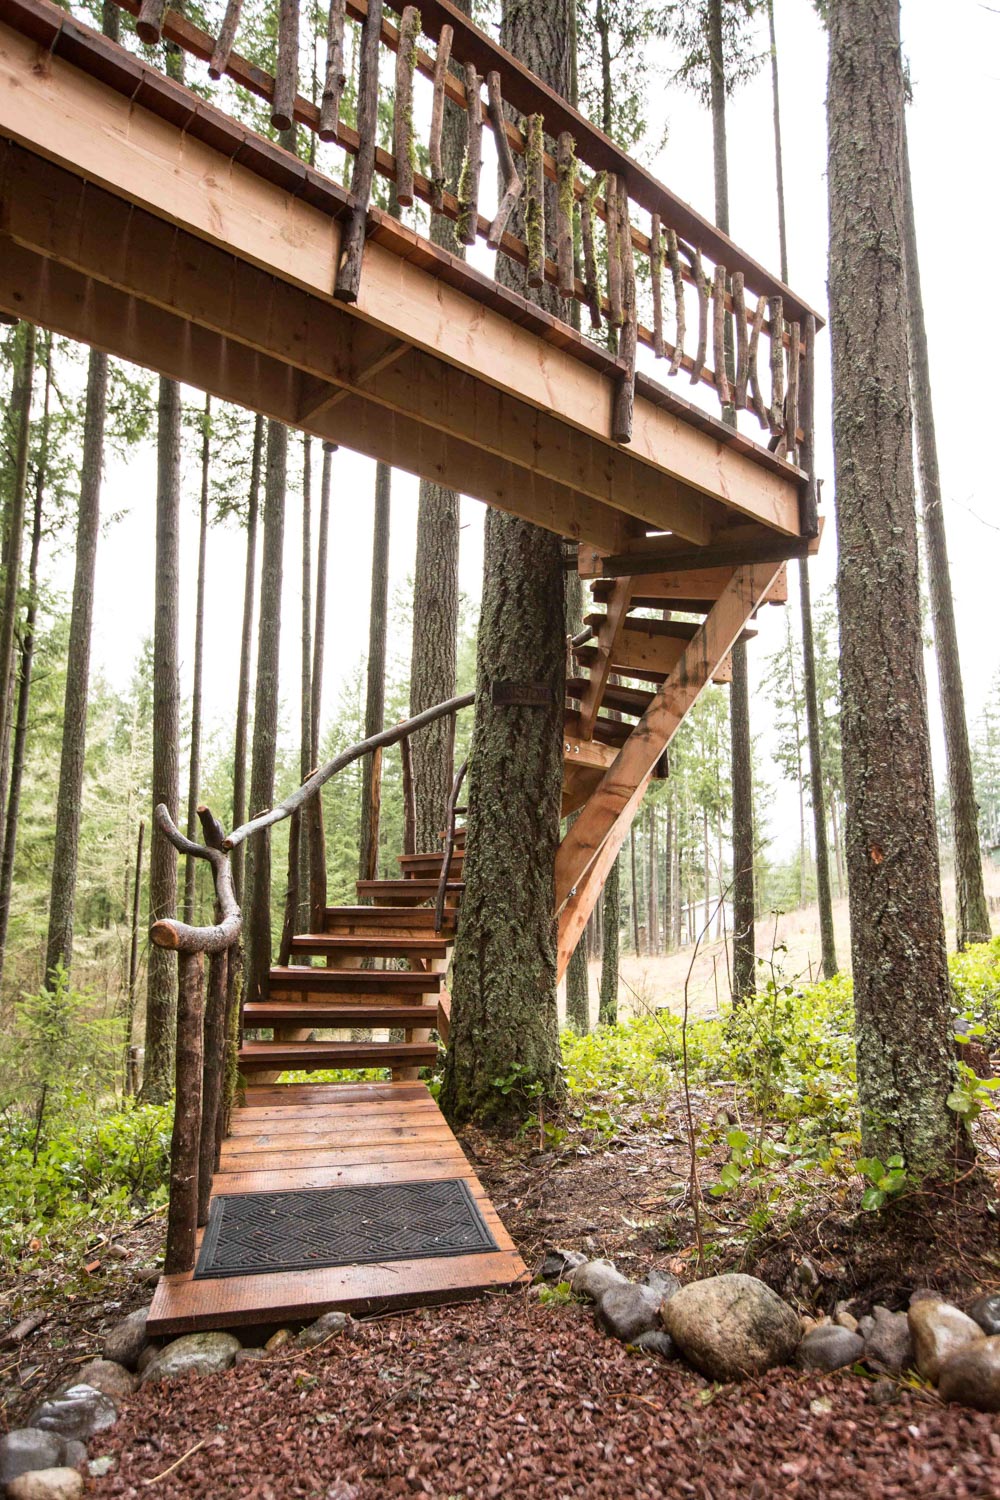  Safari Treehouse Stairway 